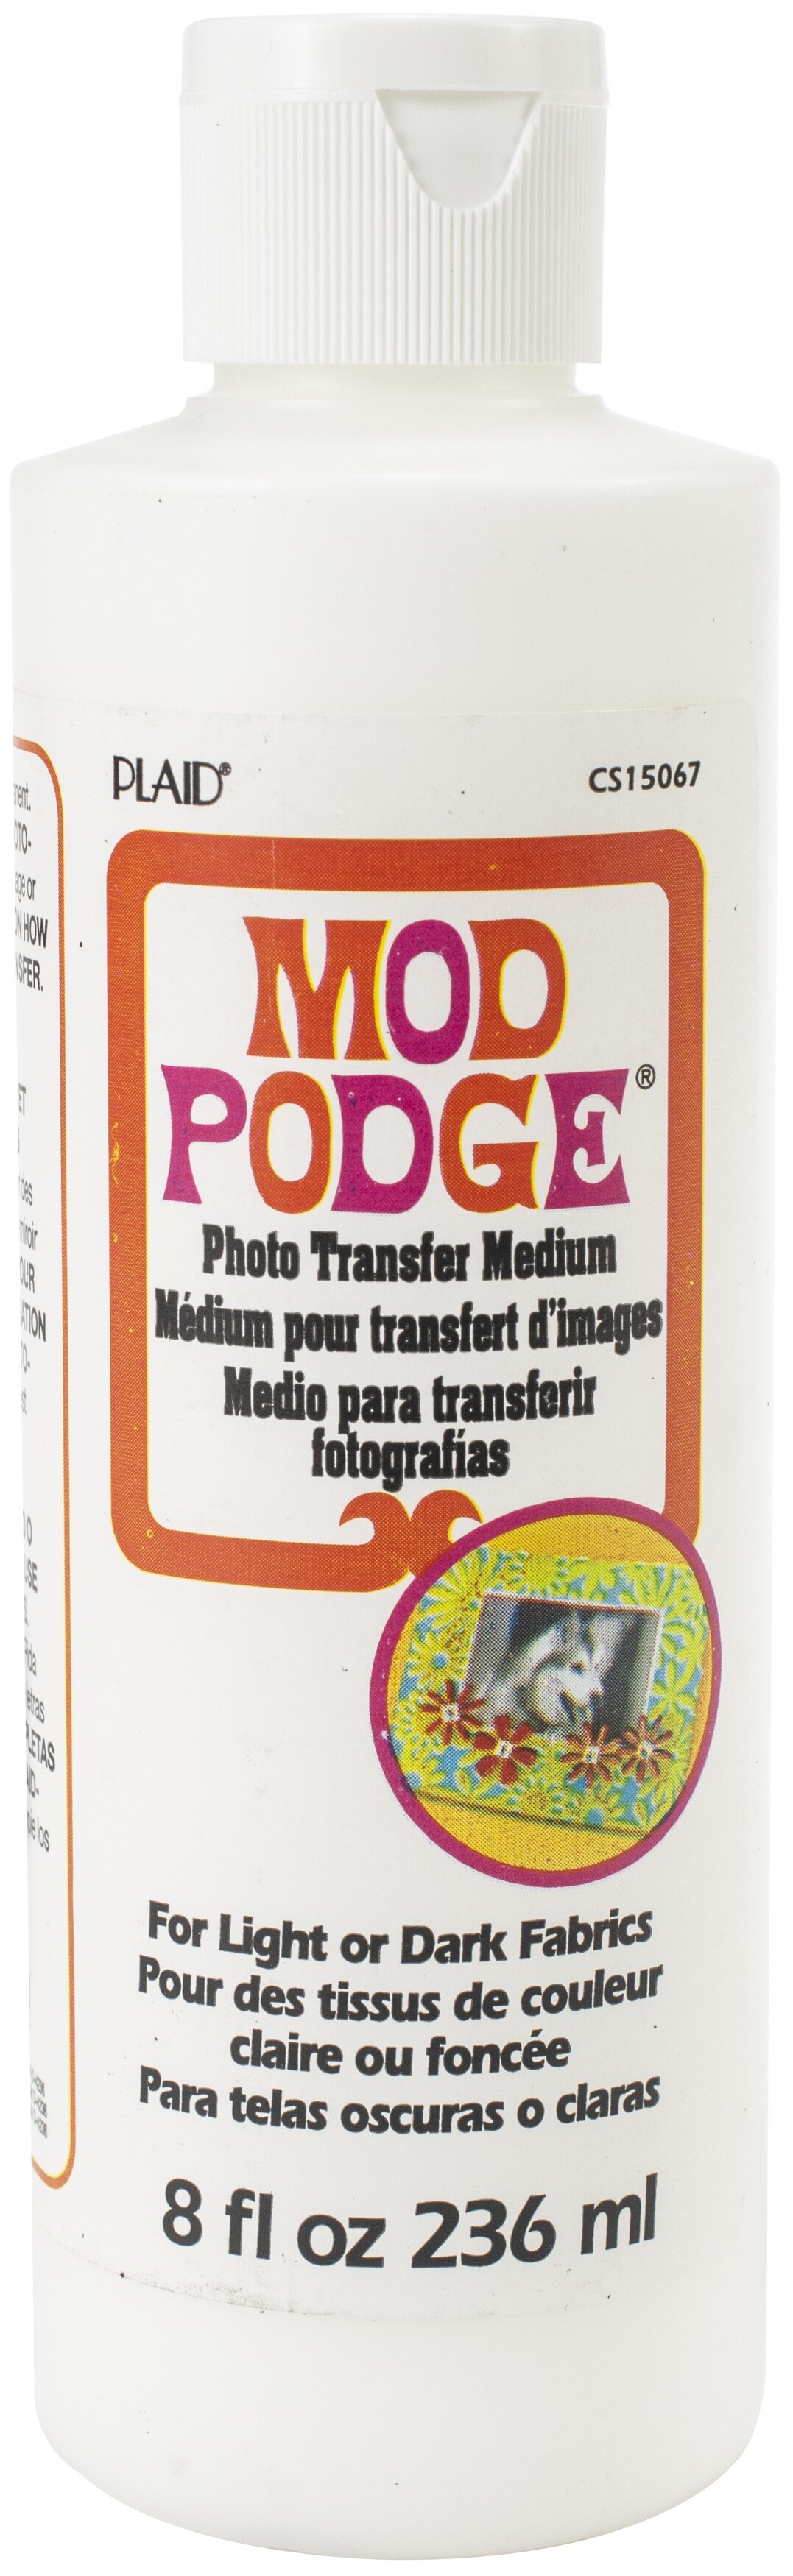 Plaid Mod Podge Photo Transfer Medium-8oz